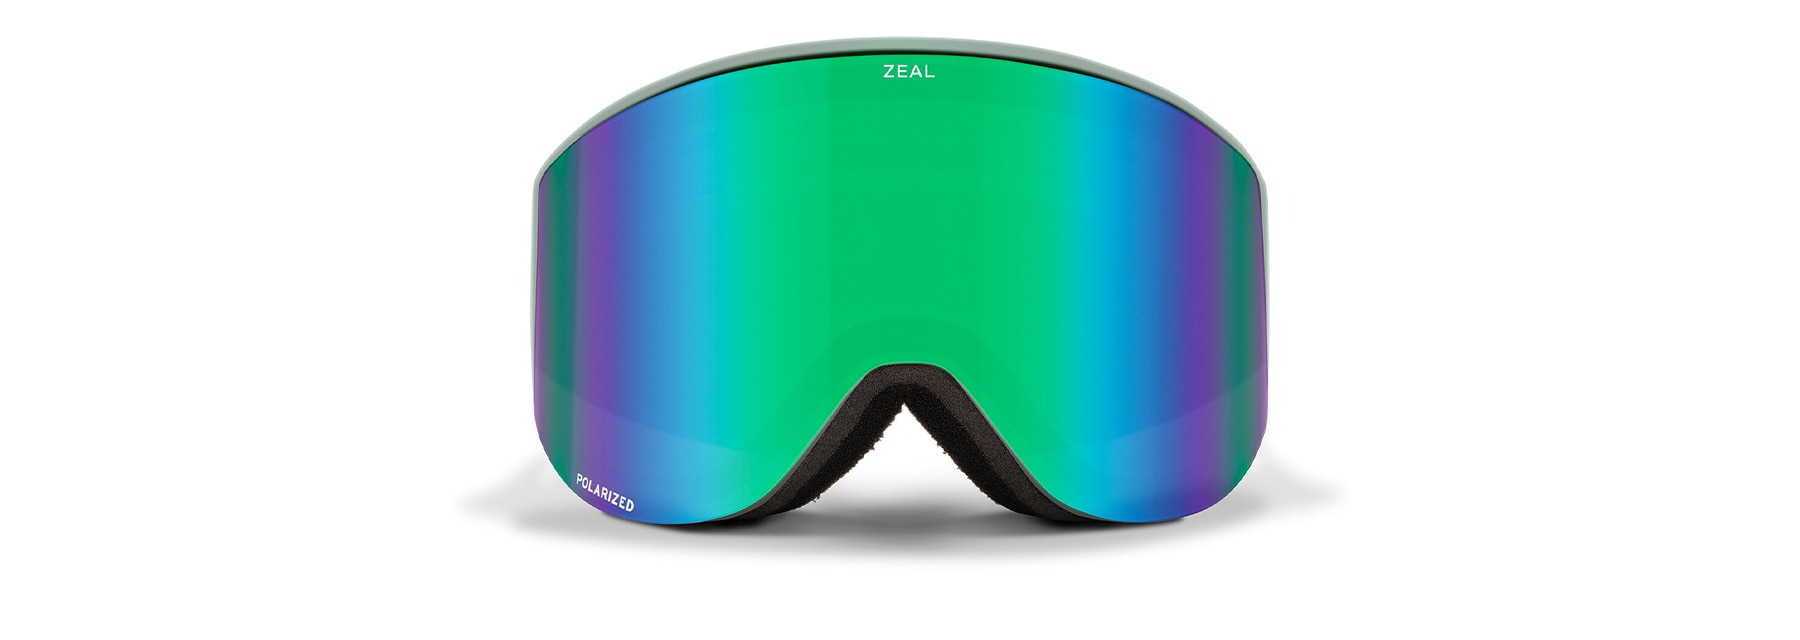 Shop BEACON (Z1768) Goggles by Zeal | Zeal Optics